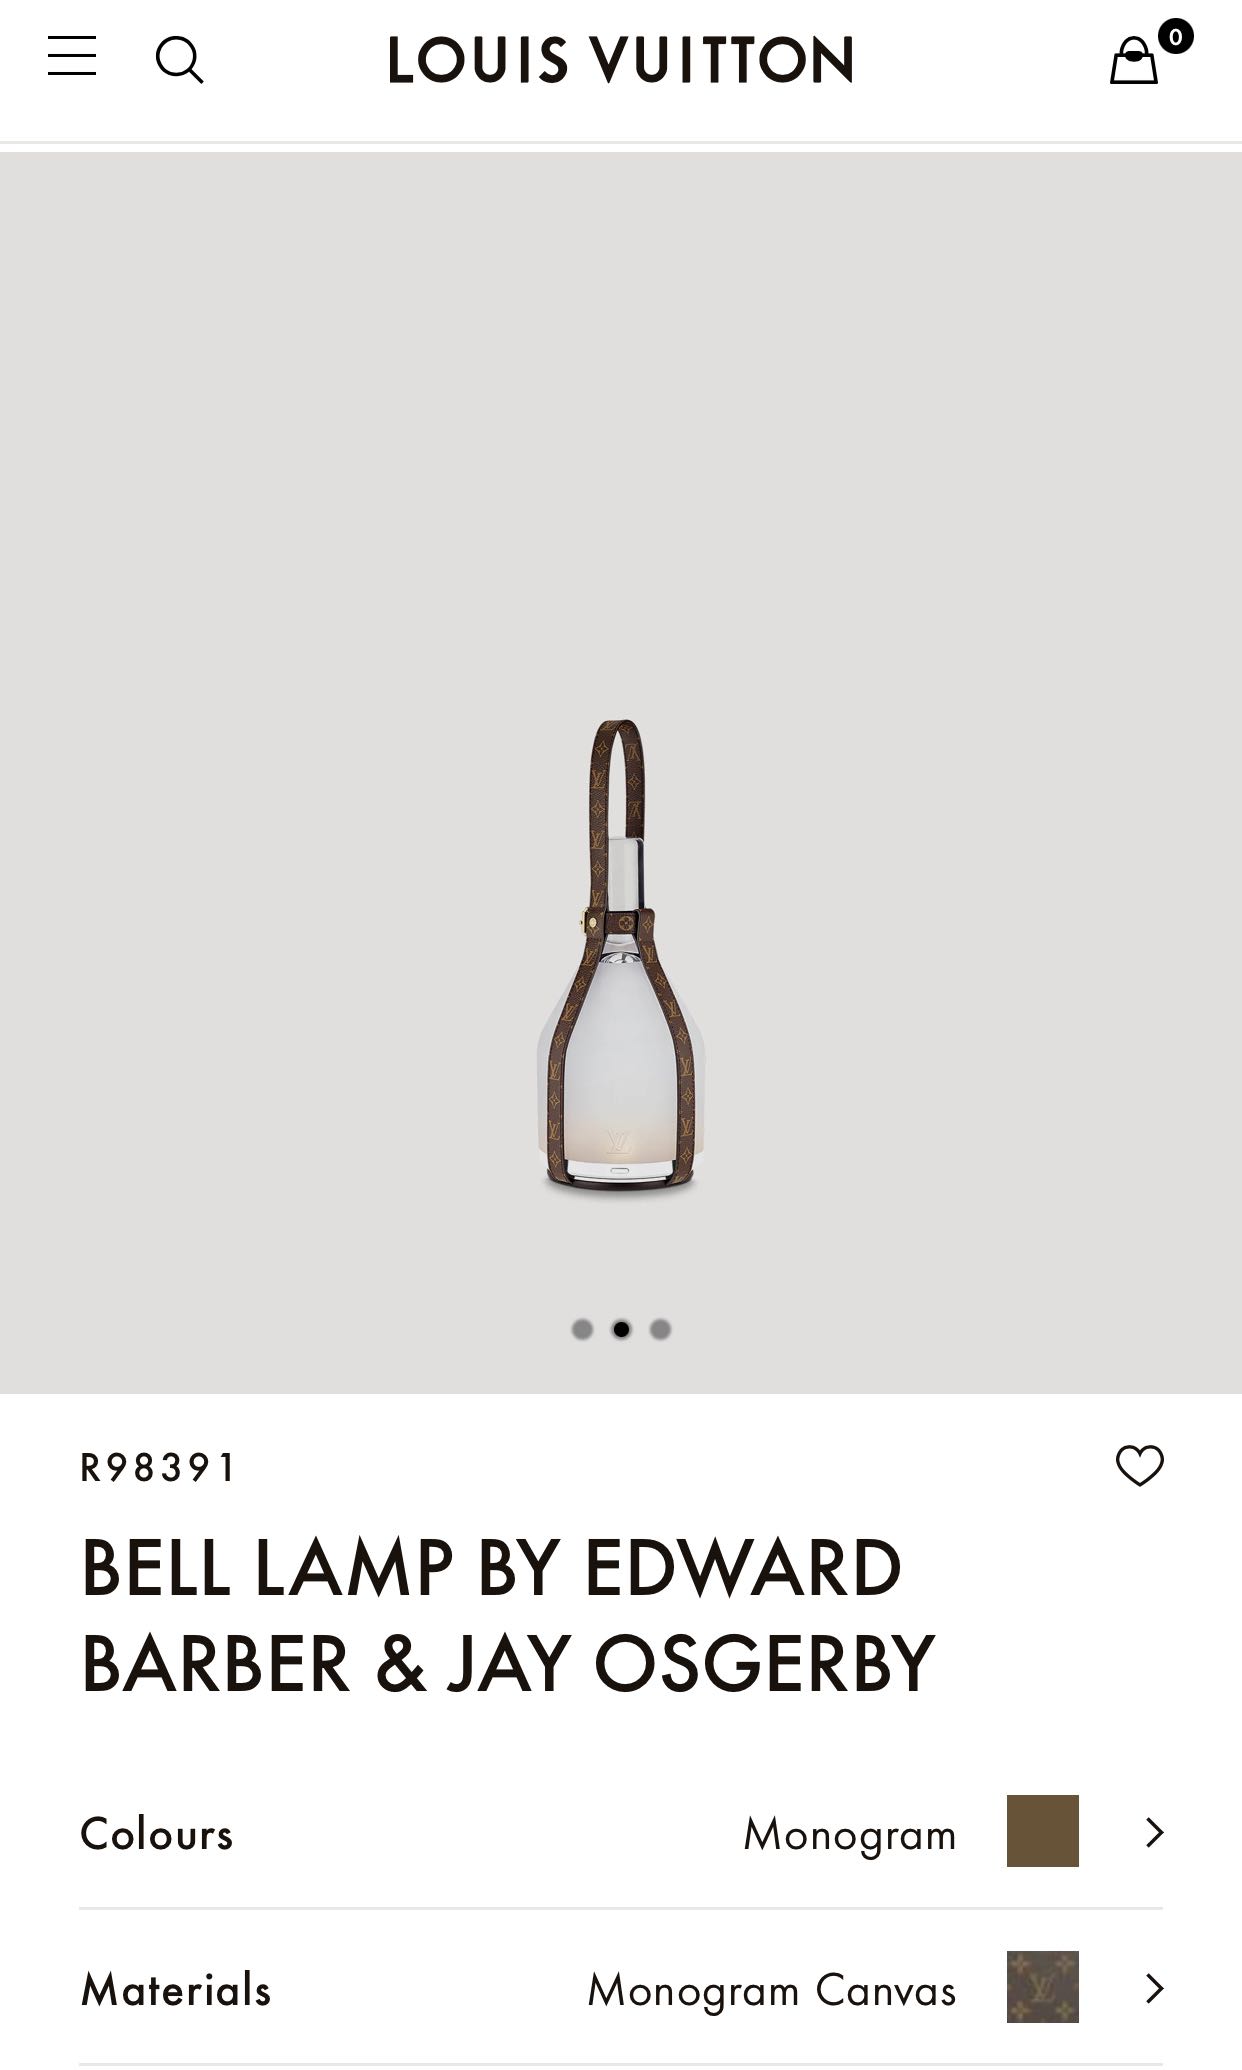 LV BELL LAMP BY EDWARD BARBER & JAY OSGERBY